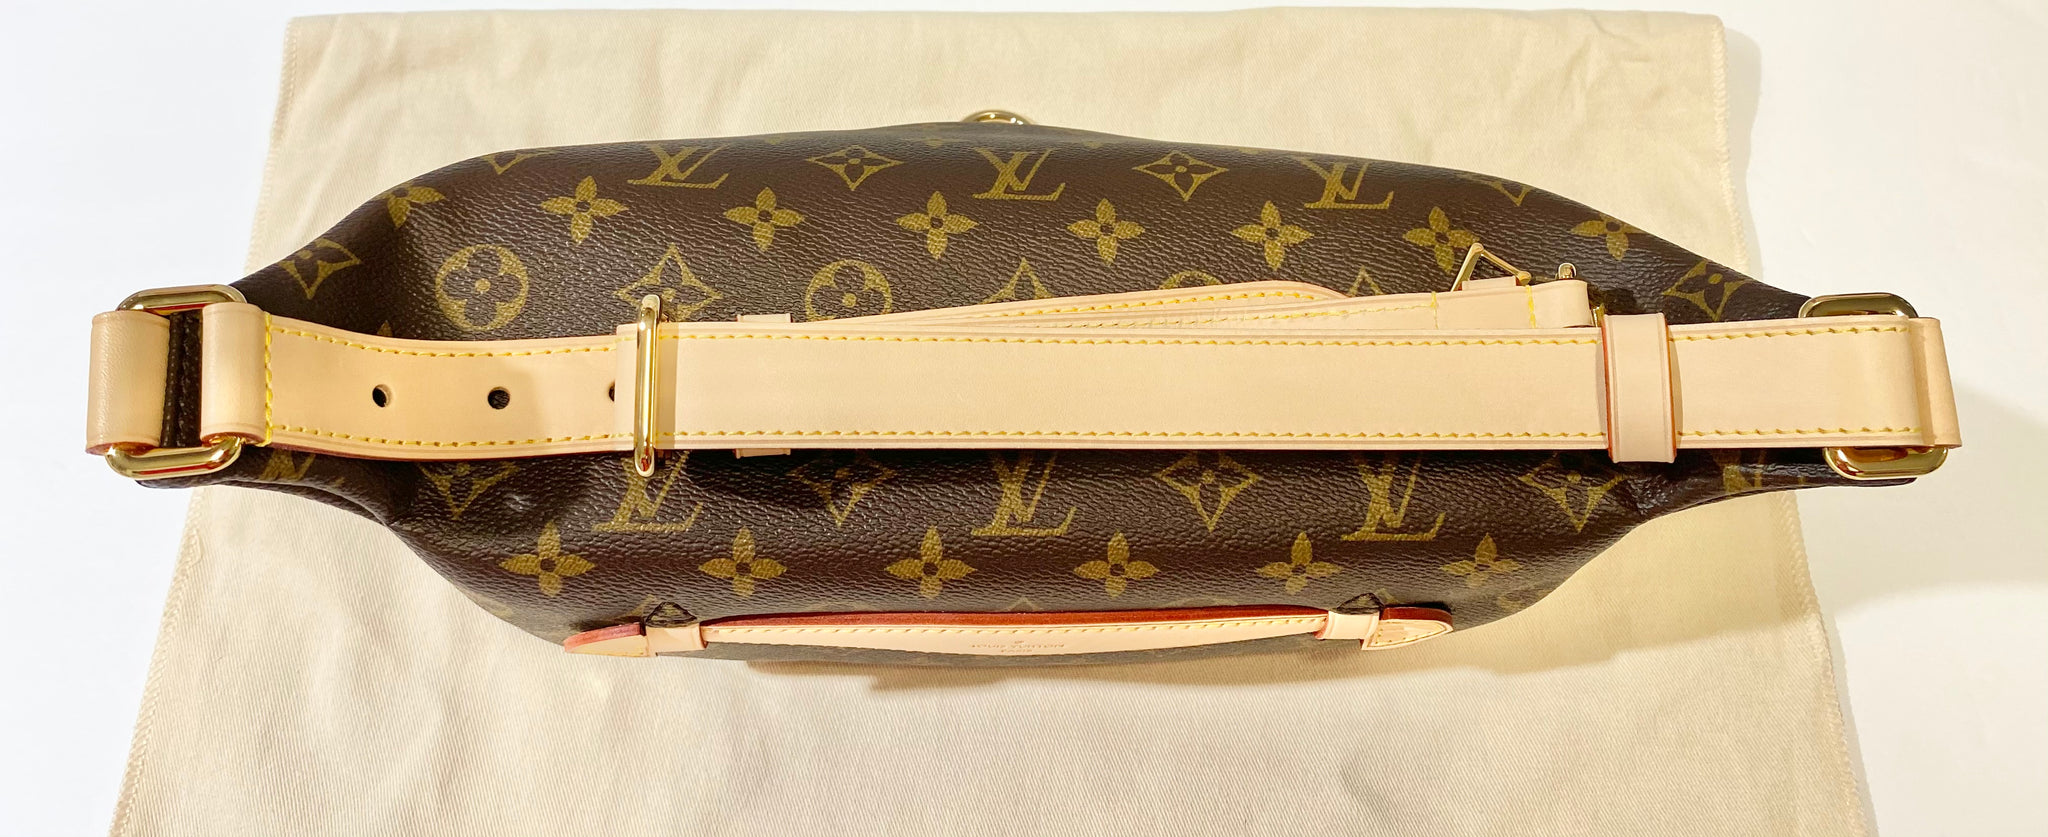 Louis Vuitton Monogram Fanny Pack Waist Bum Bag (2020)